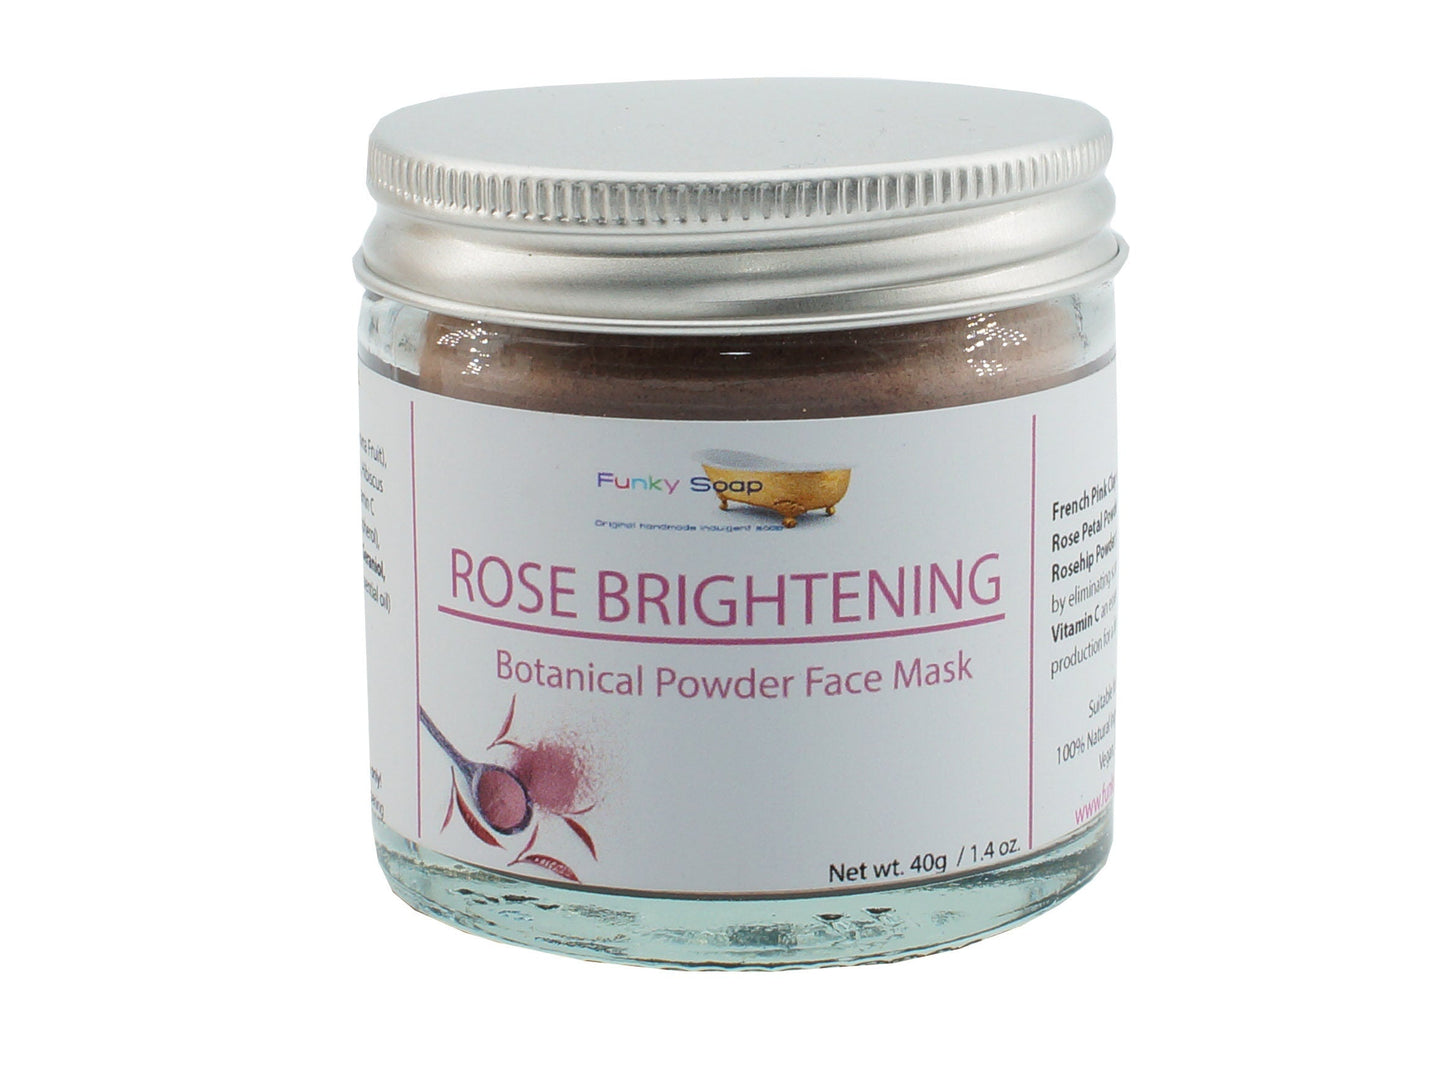 Rose Brightening, Botanical Powder Face Mask, 40g - Funky Soap Shop